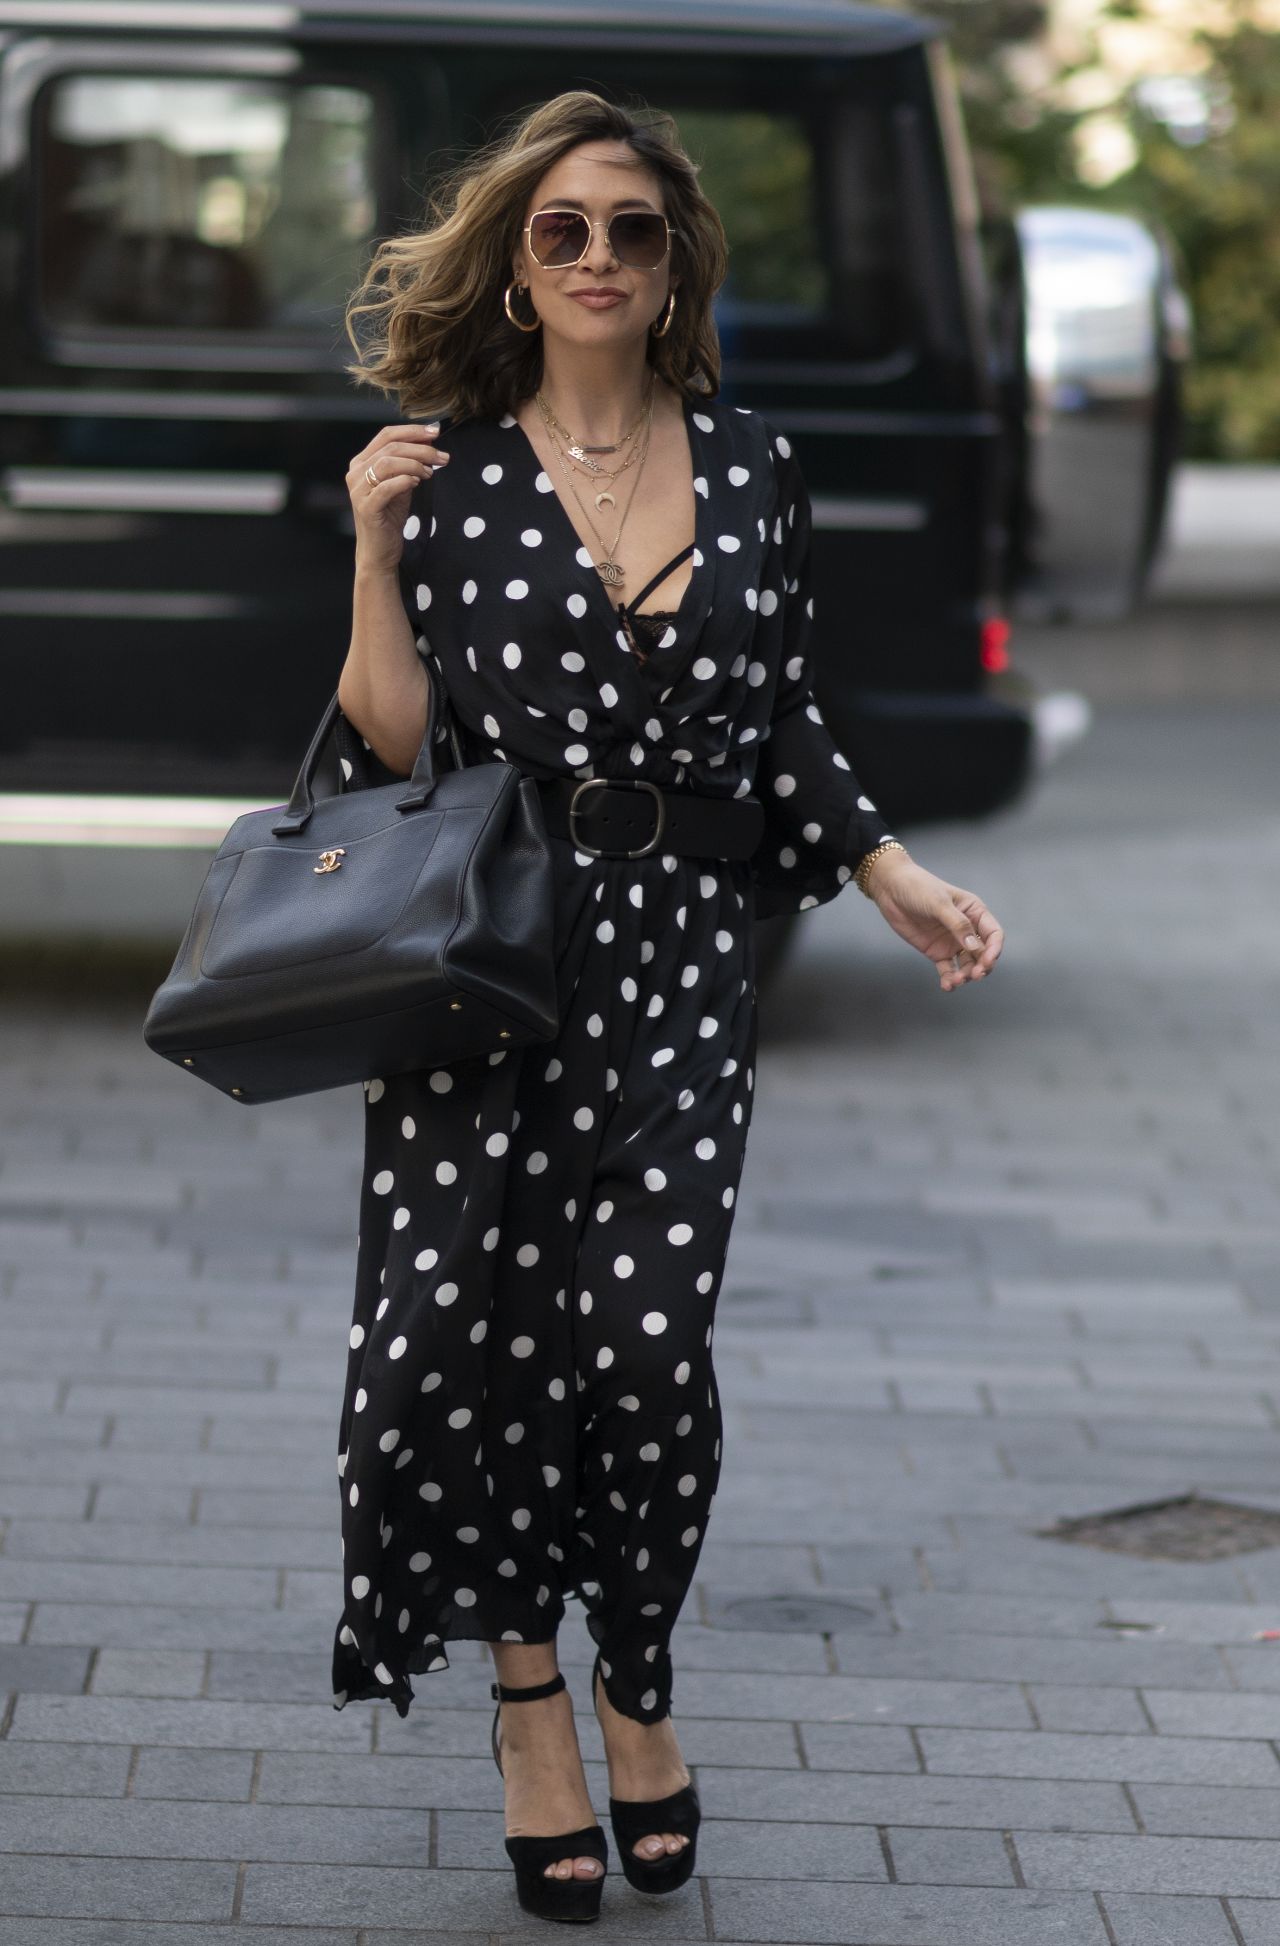 Myleene Klass in Monochrome Polka Dot Maxi Dress - London 08/26/2020 ...